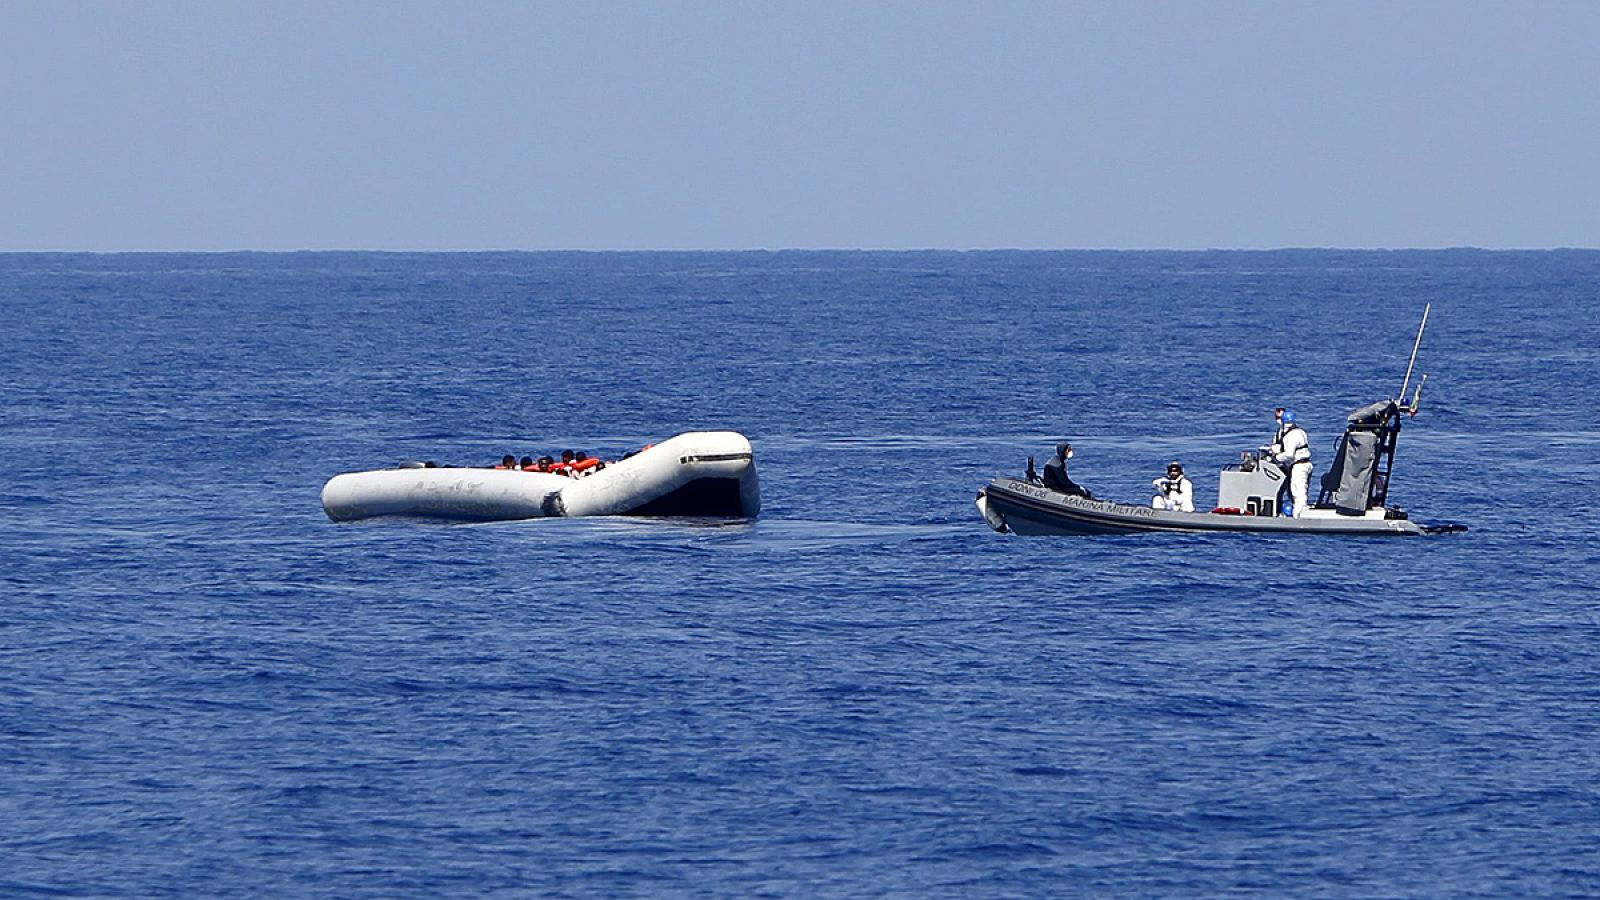 Una lancha del barco italiano "Francesco Mimbelli" rescata a varias personas de una barca hinchable frente a la costa de Libia, el 6 de agosto. REUTERS/Darrin Zammit Lupi